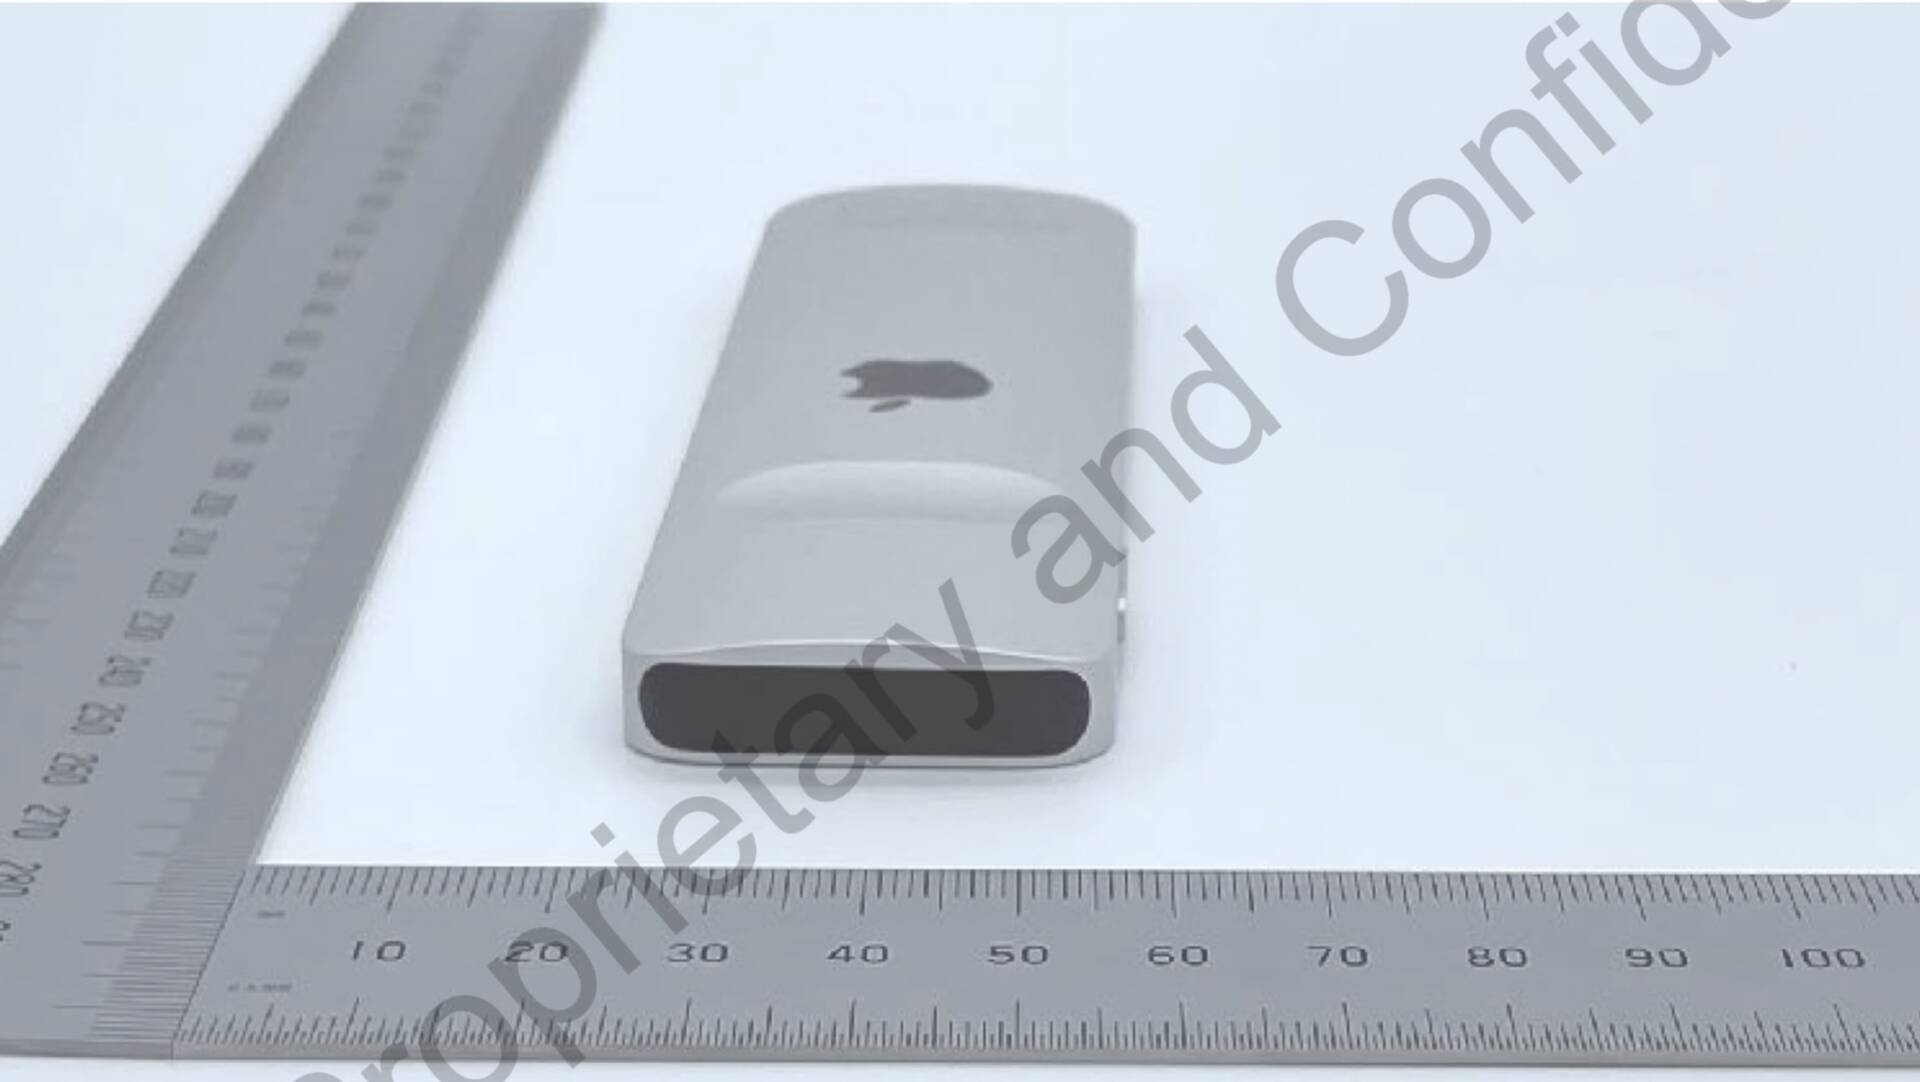 Apple TV Siri Remote prototyp